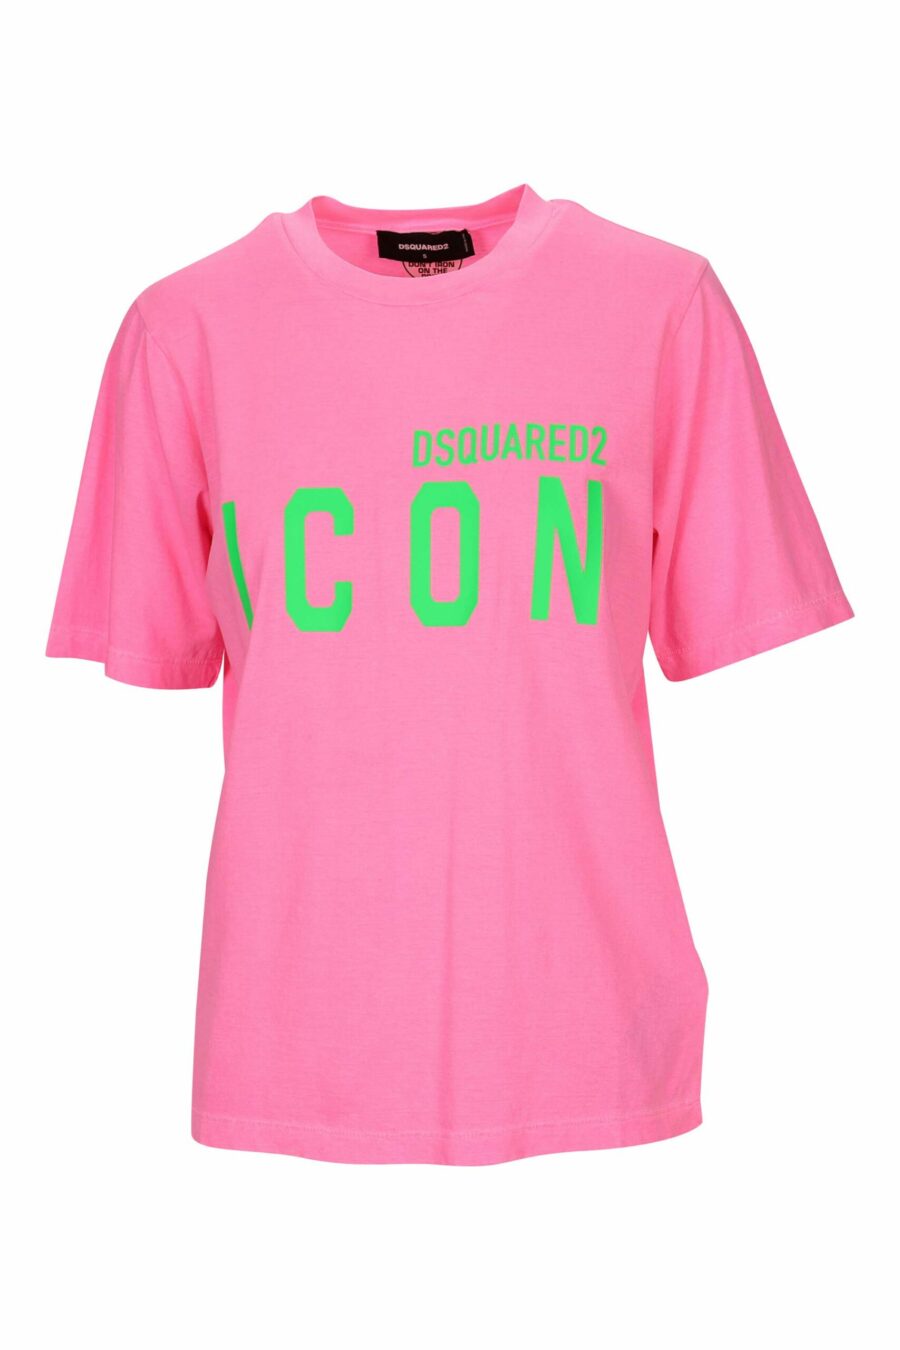 Camiseta fucsia con logo verde neon - 8054148405106 scaled